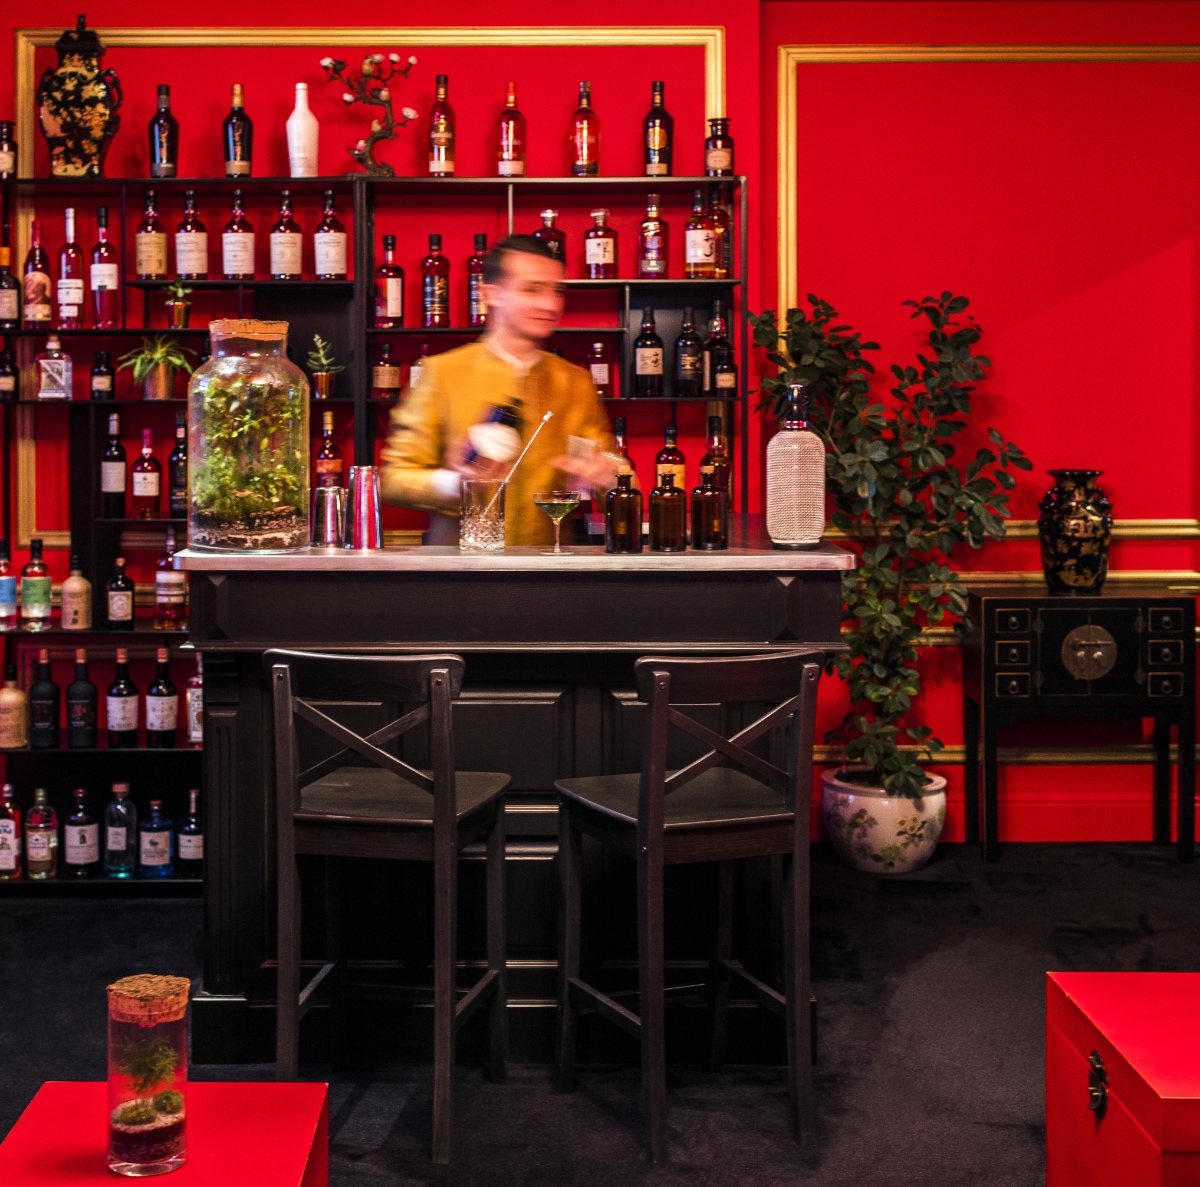 Shangri-La Hotel Paris barman